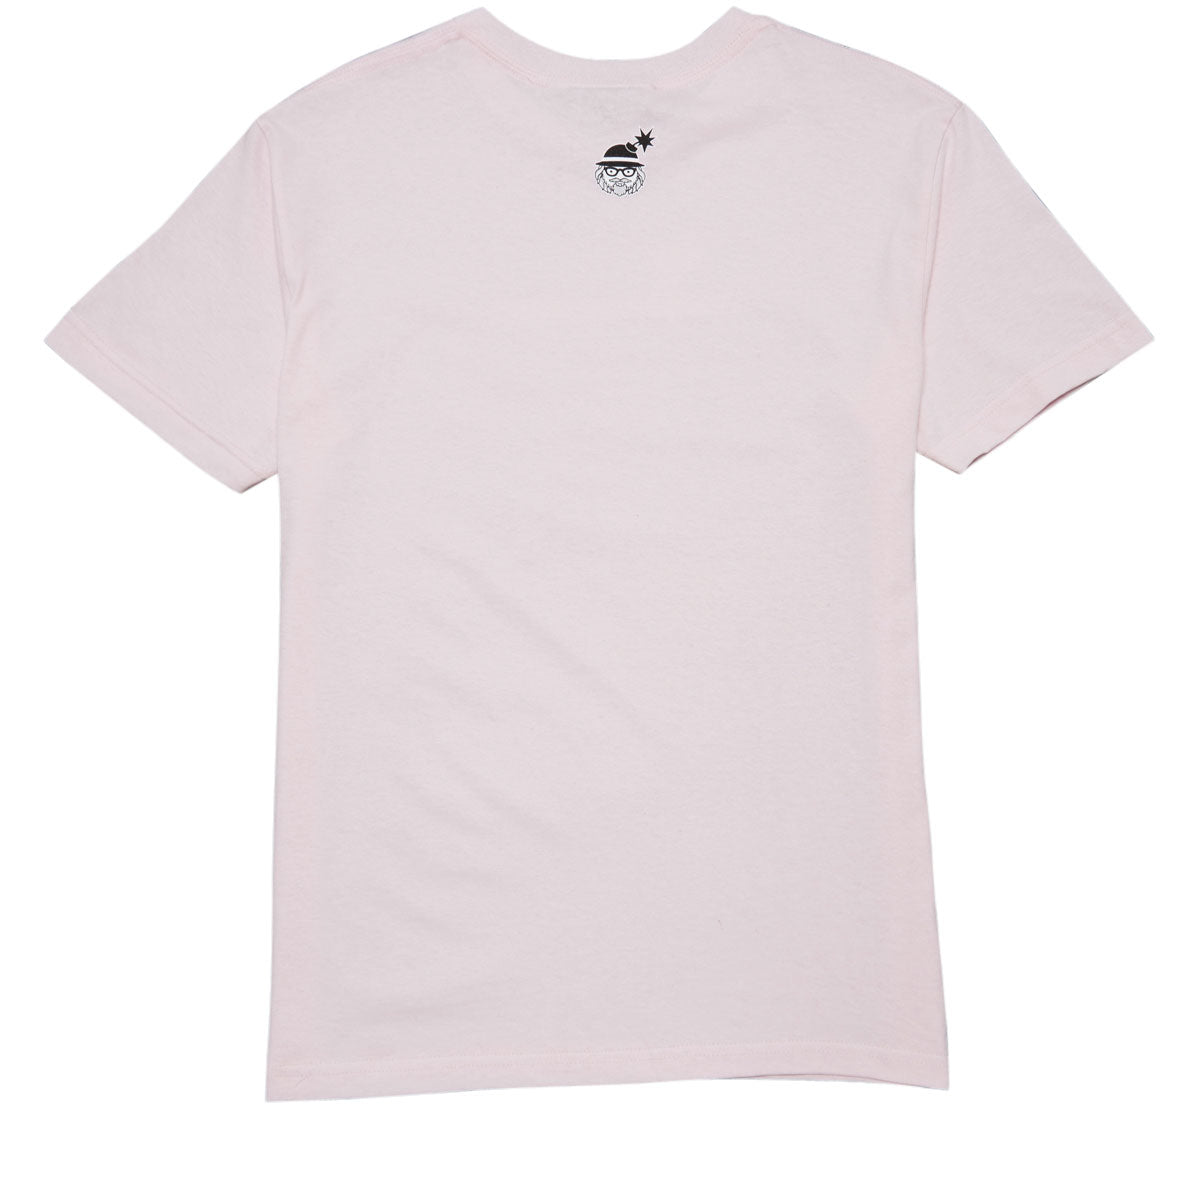 The Hundreds x Ron English Fawn T-Shirt - Pink image 2